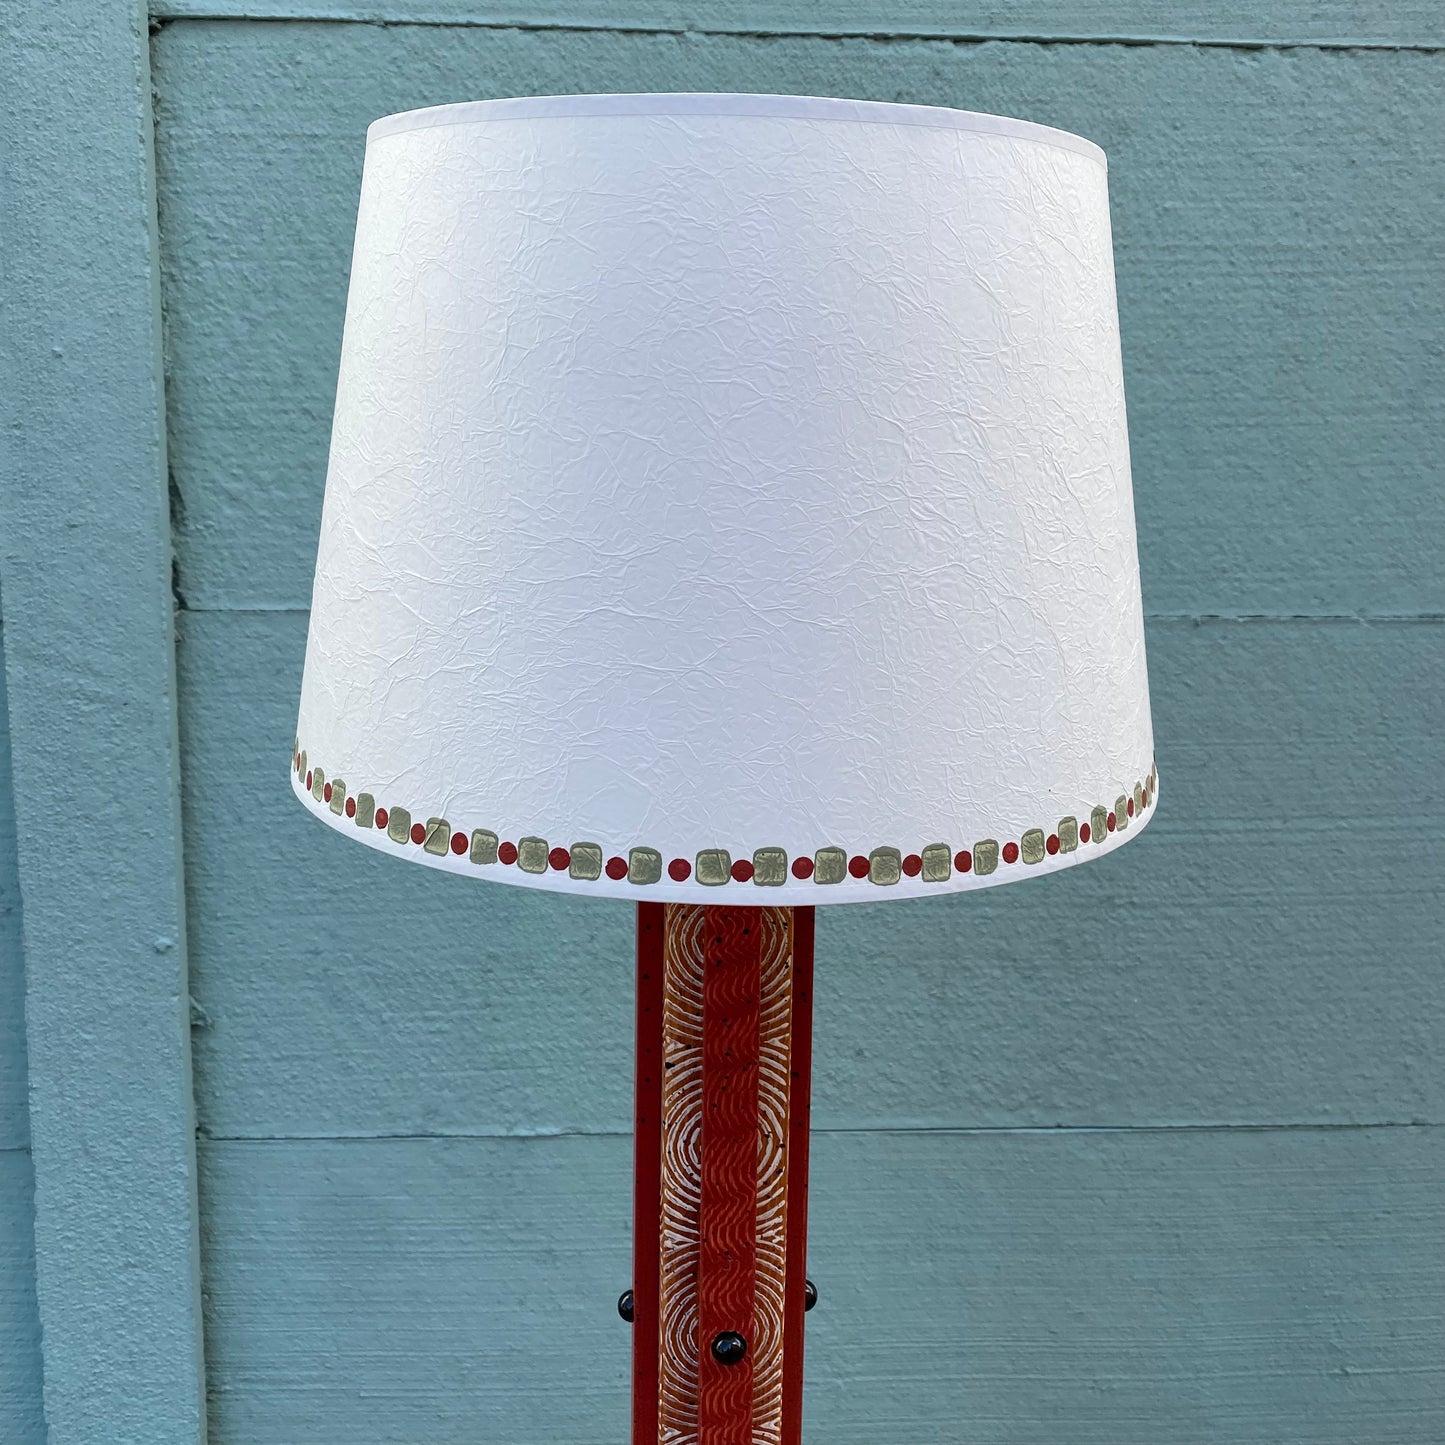 David Marsh M&T Floor Lamp - Style #5